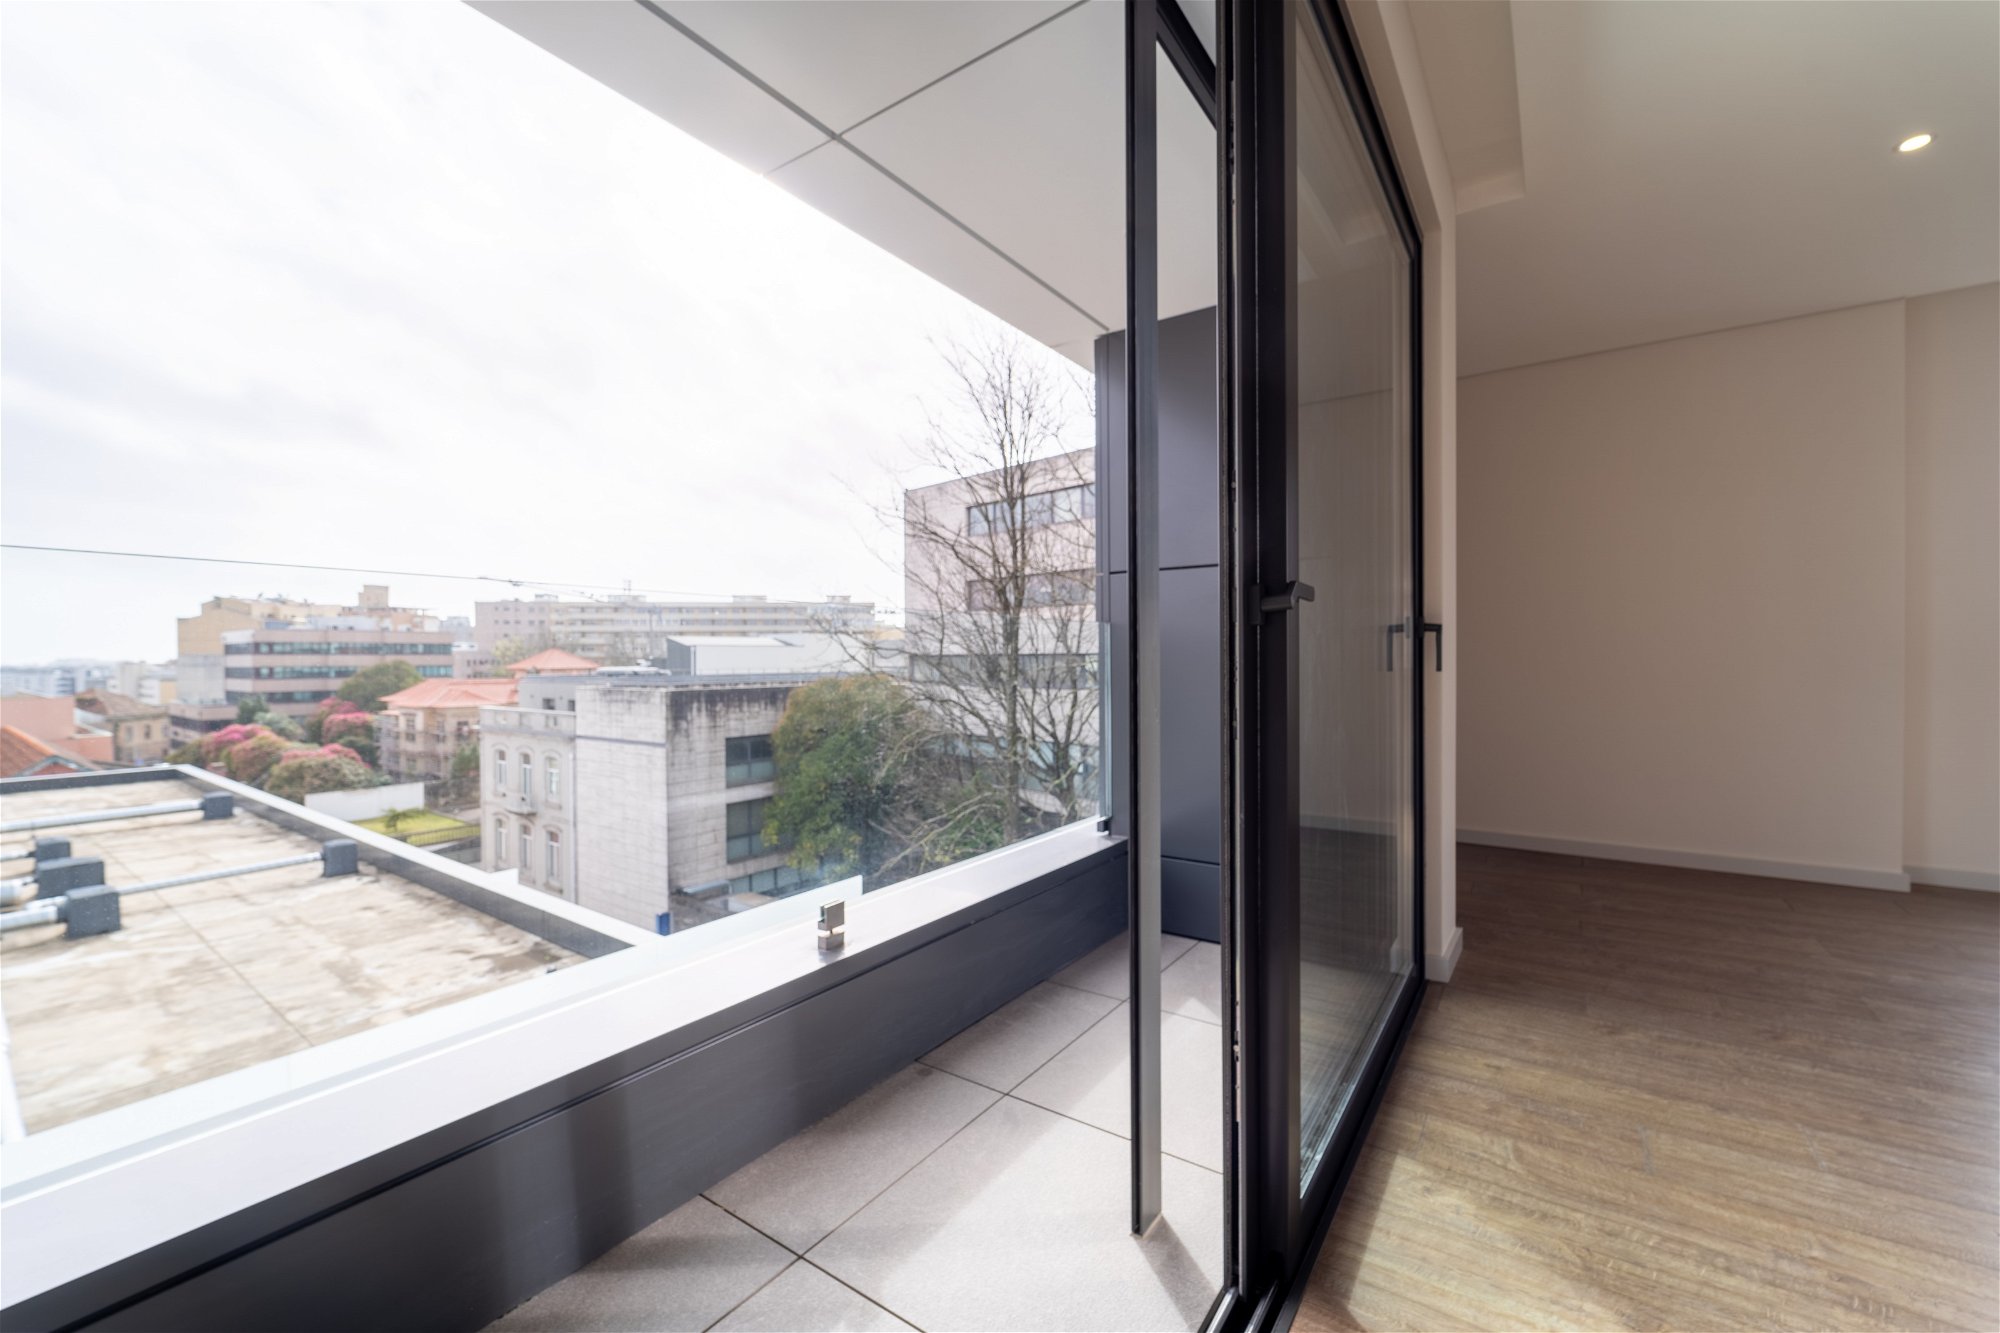 3 bedrooms apartment with balcony in Boavista, Porto 559920171